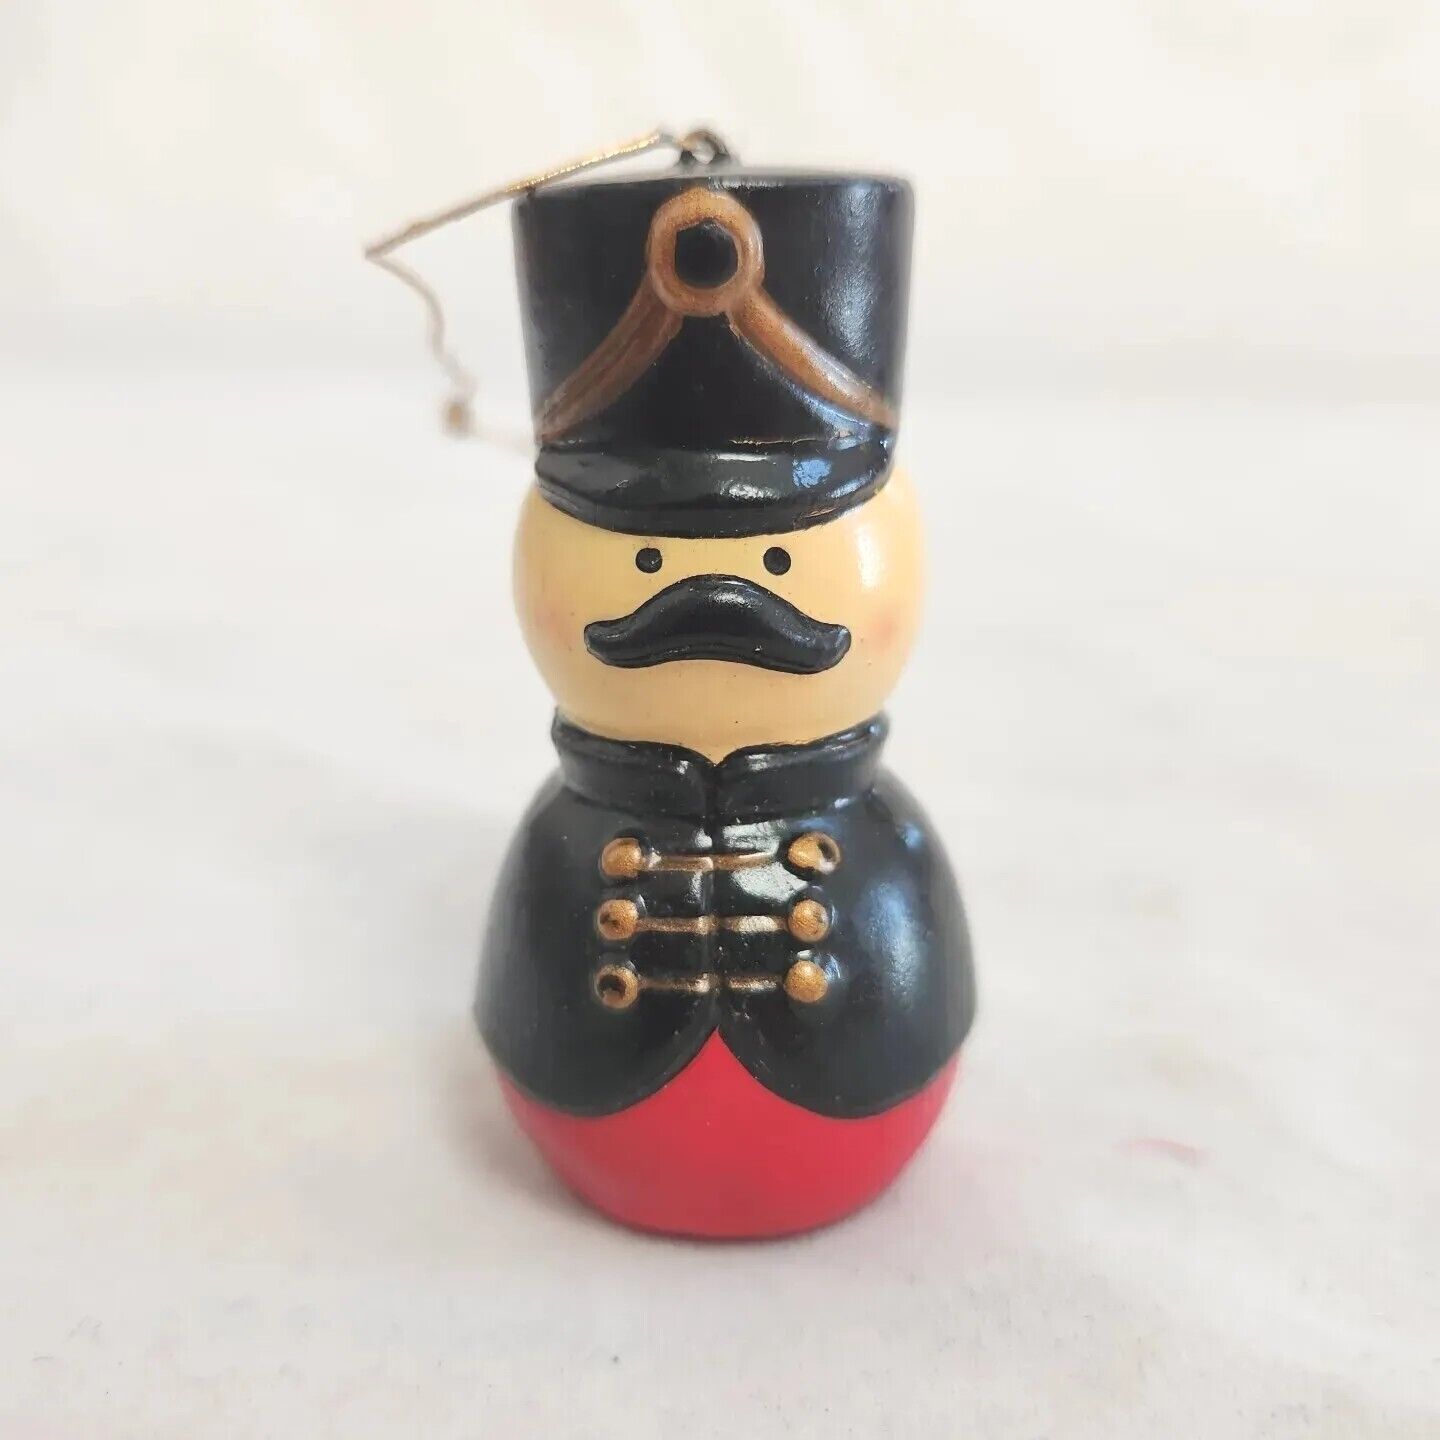 Vintage Wood Toy British Royal Guard Soldier Christmas Ornament Black Mustache